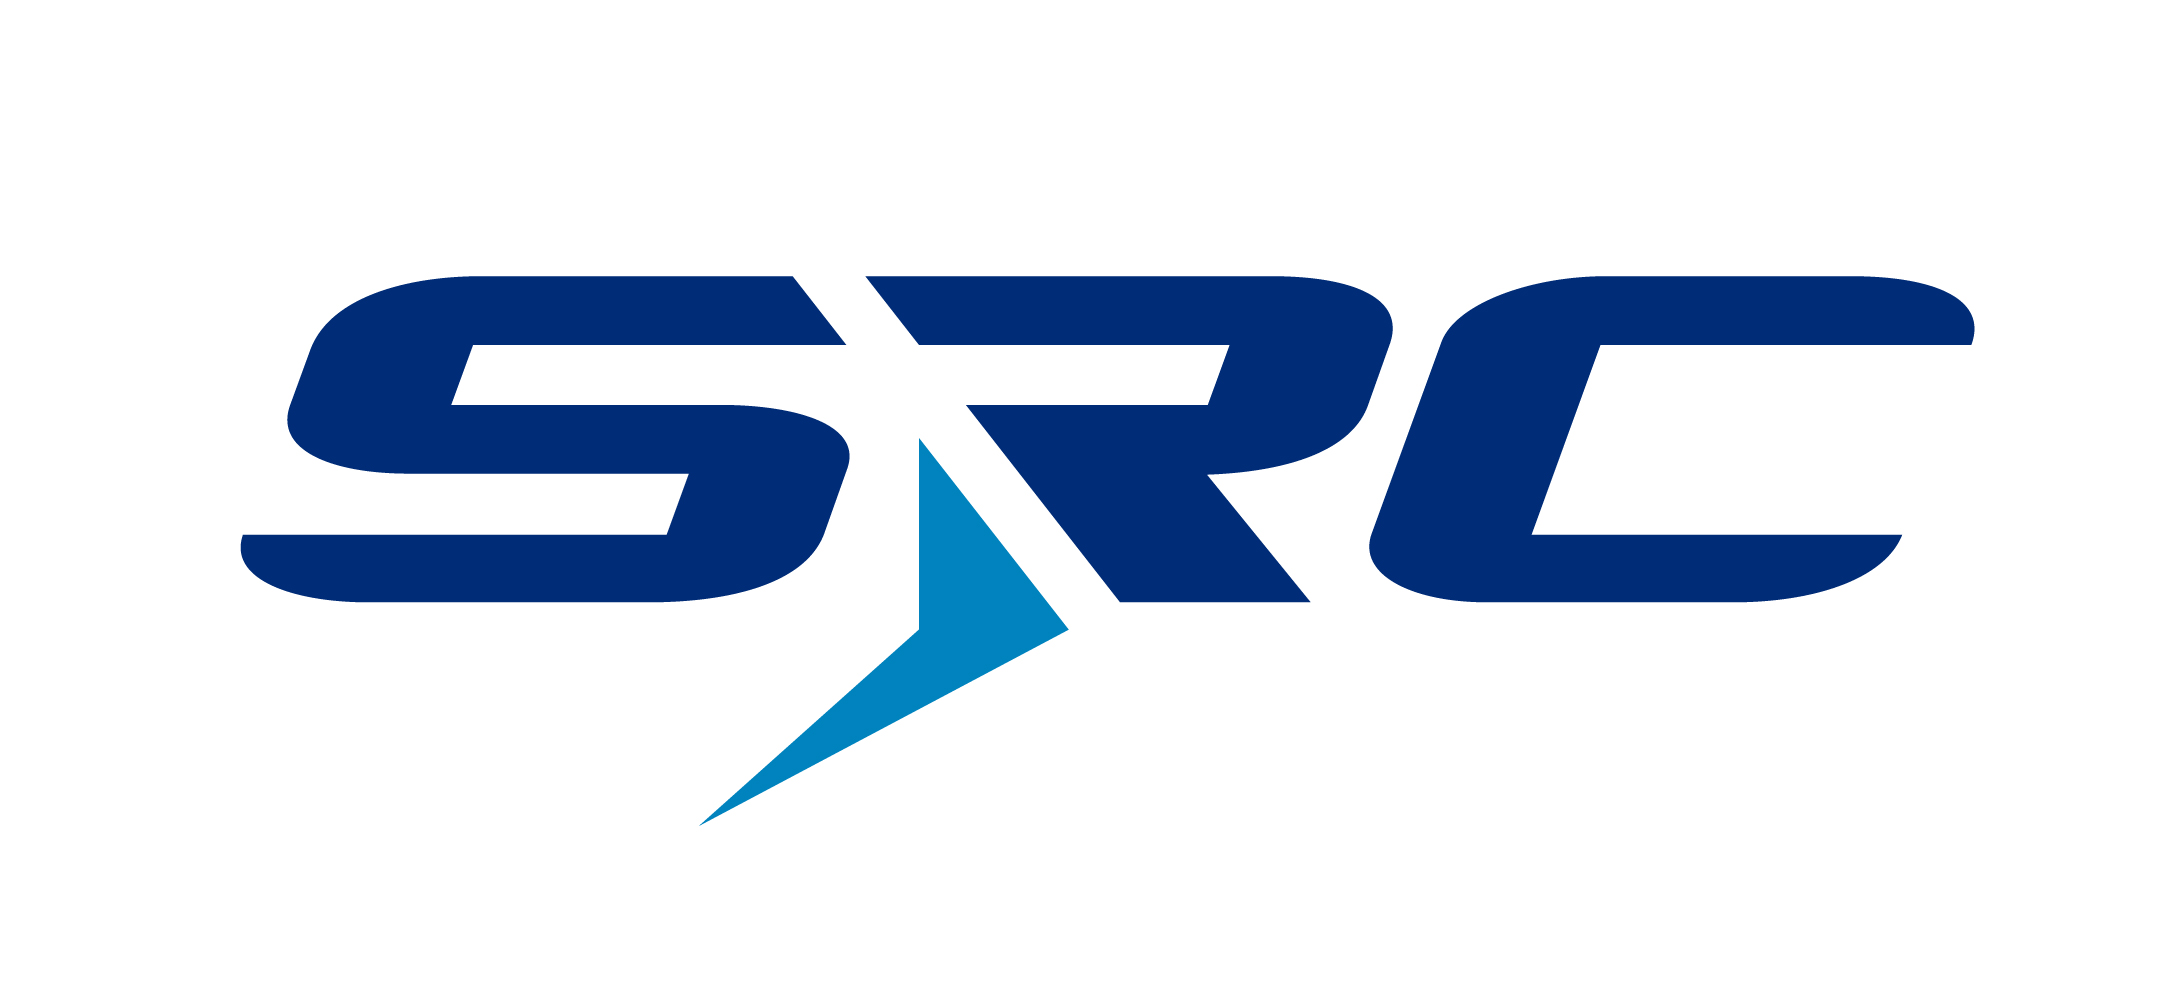 SRC, Inc.